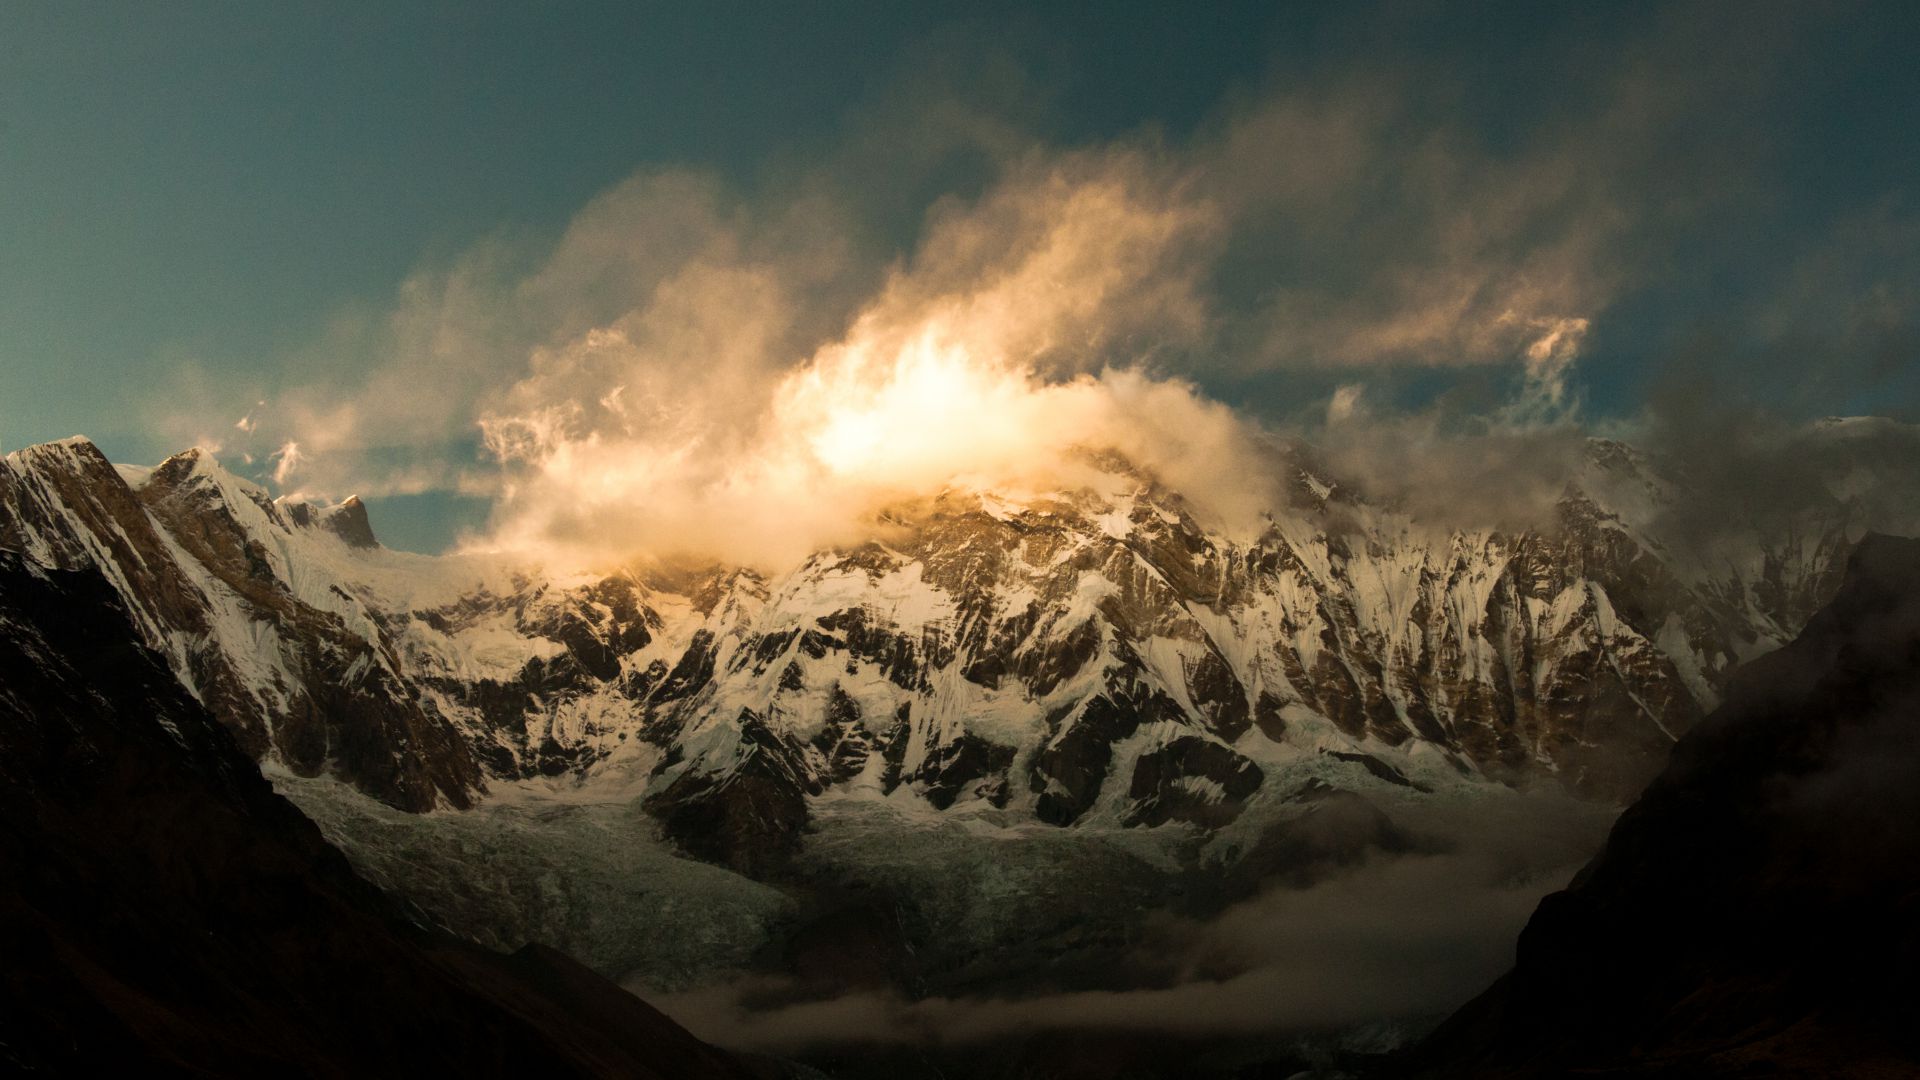 Аннапурна, 5k, 4k, Гималаи, Непал, облака, горы, закат, Annapurna, 5k, 4k wallpaper, Himalayas, Nepal, clouds, mountain, sunset (horizontal)